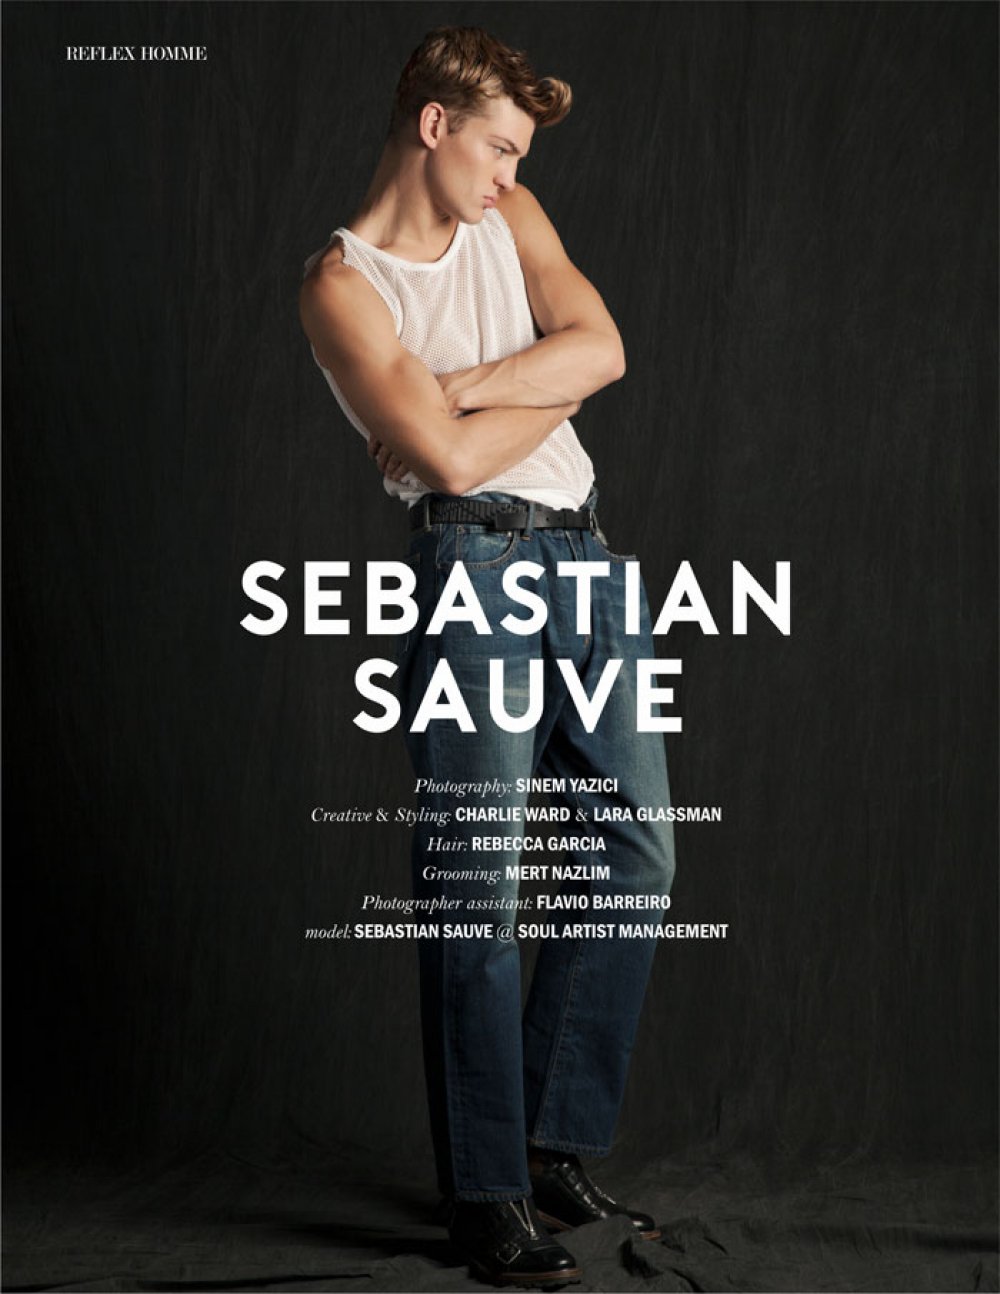 Back to Basics: Sebastian Sauvé Covers Reflex Homme